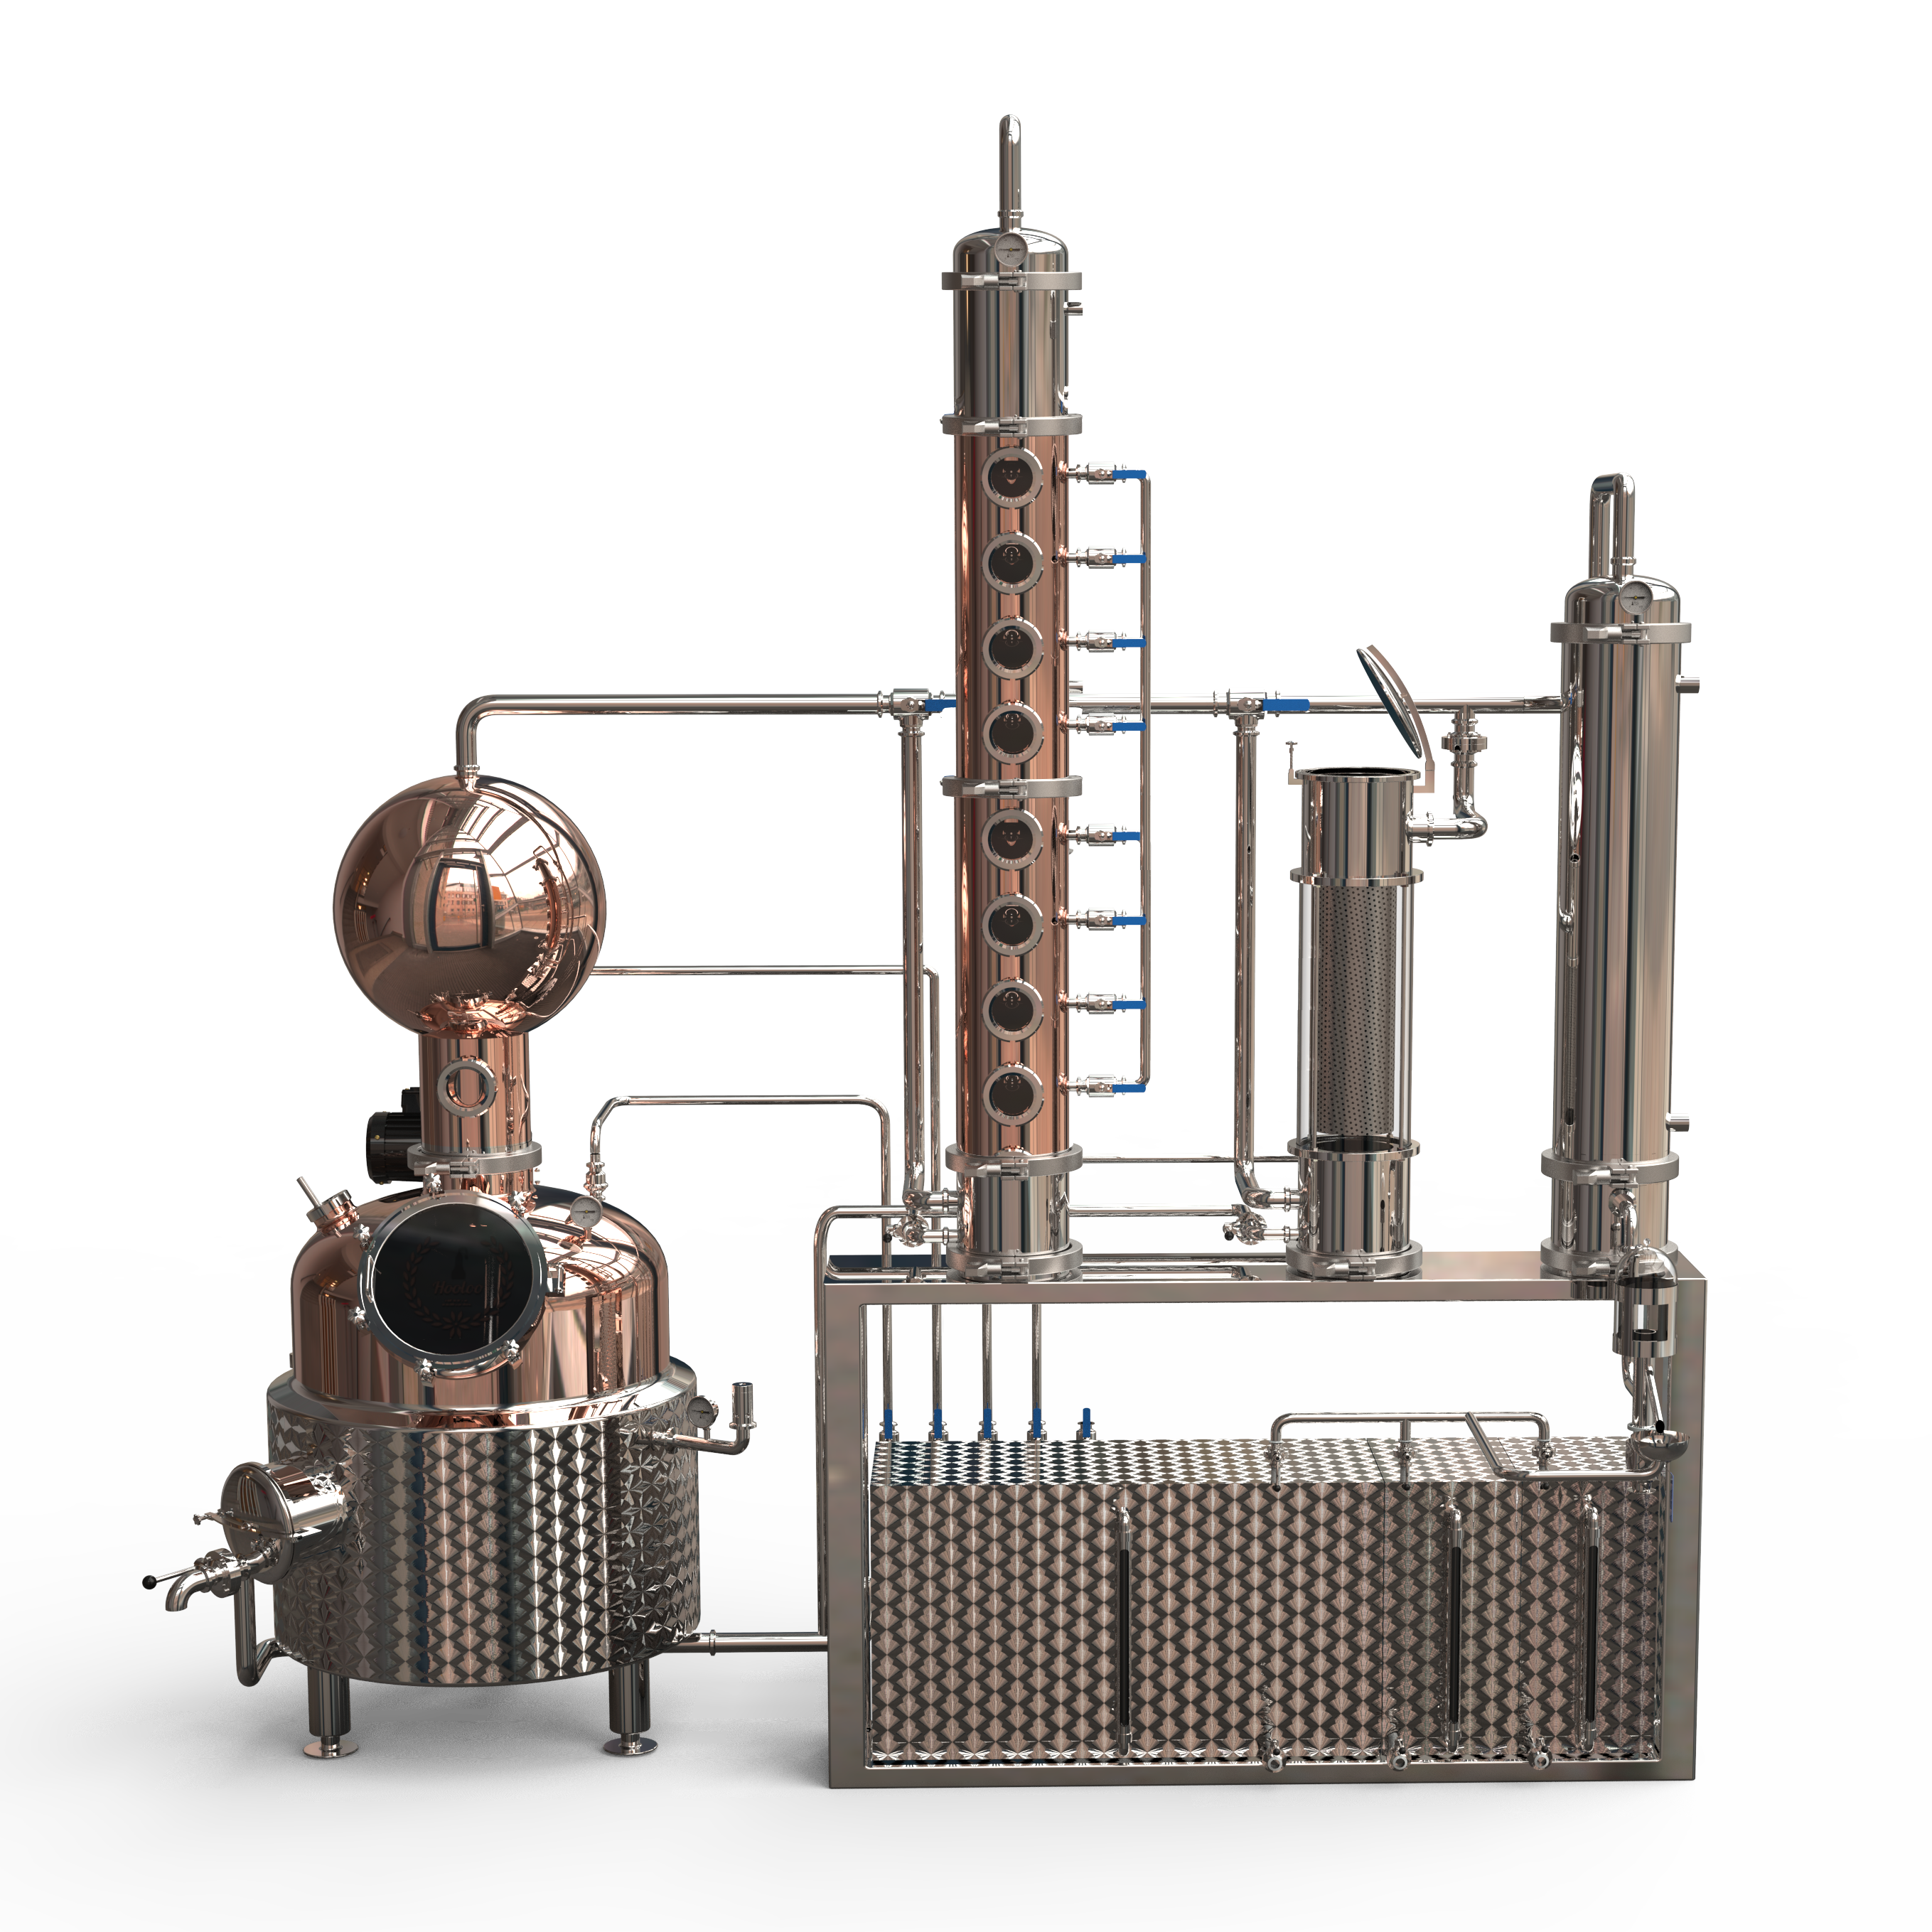 300L Classic Distillation System (DT300-4/8)